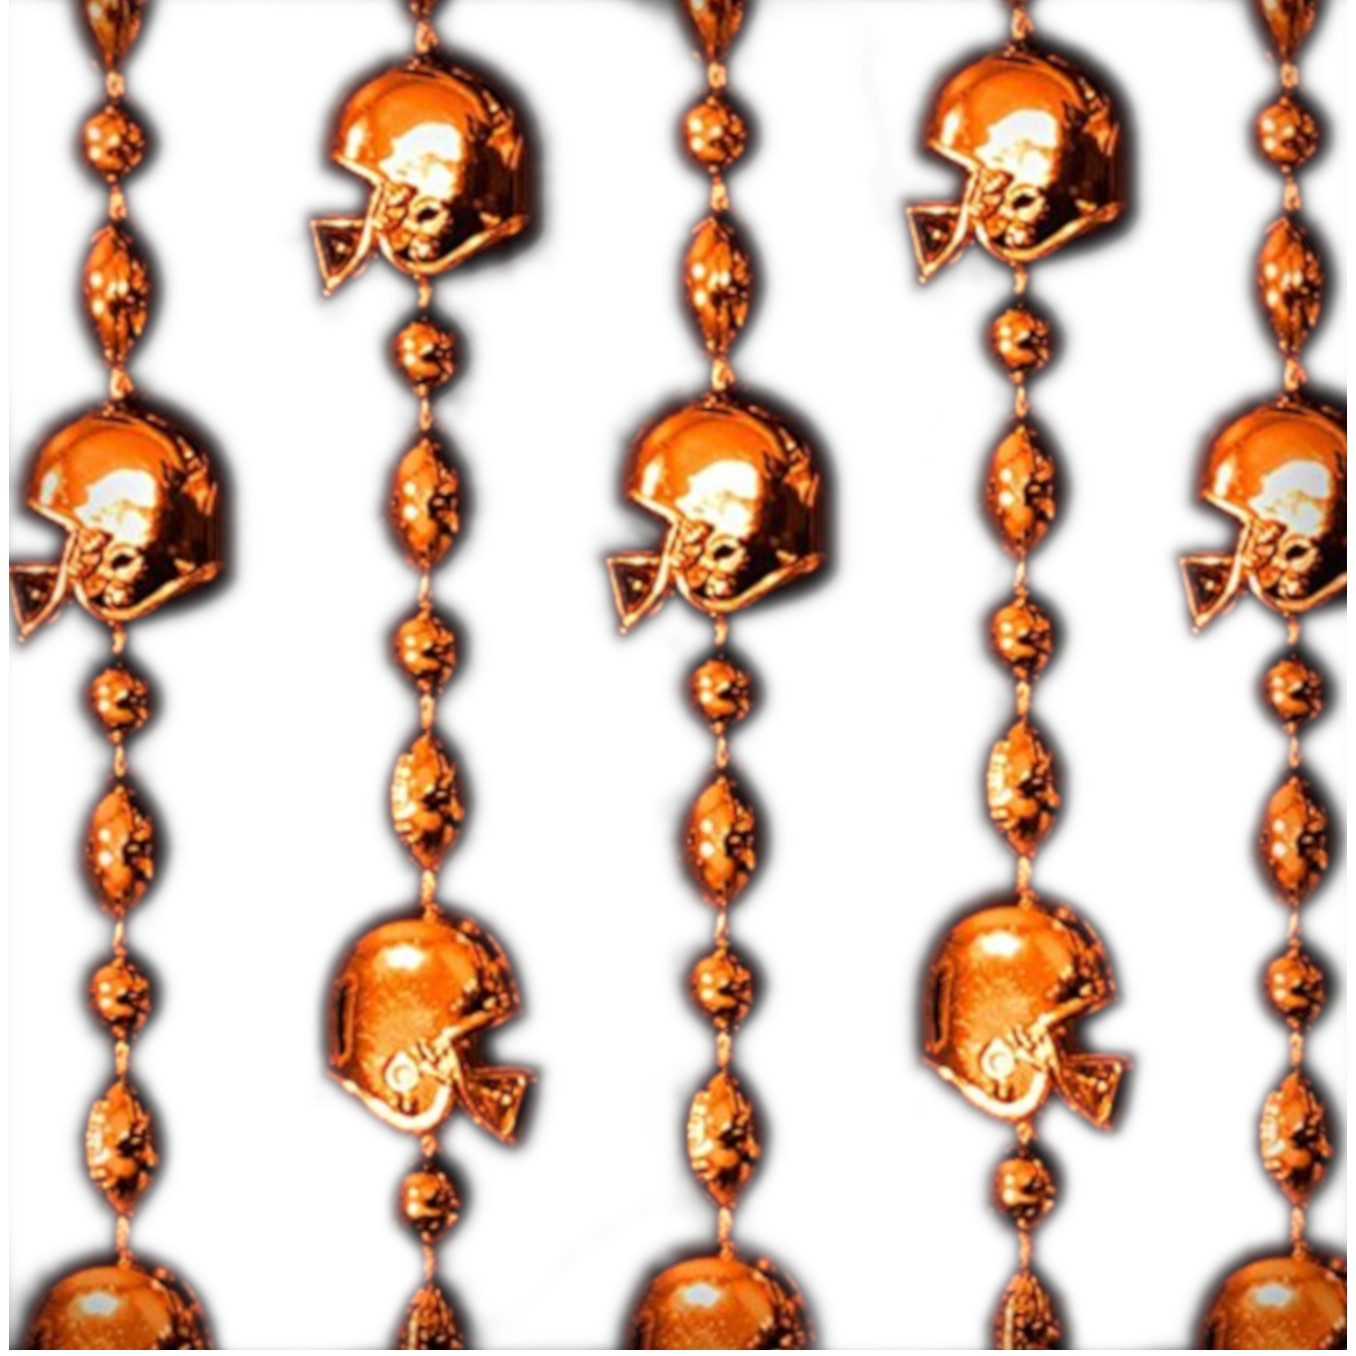 Football Helmet Bead Necklaces Metallic Orange Pack of 12 All Products